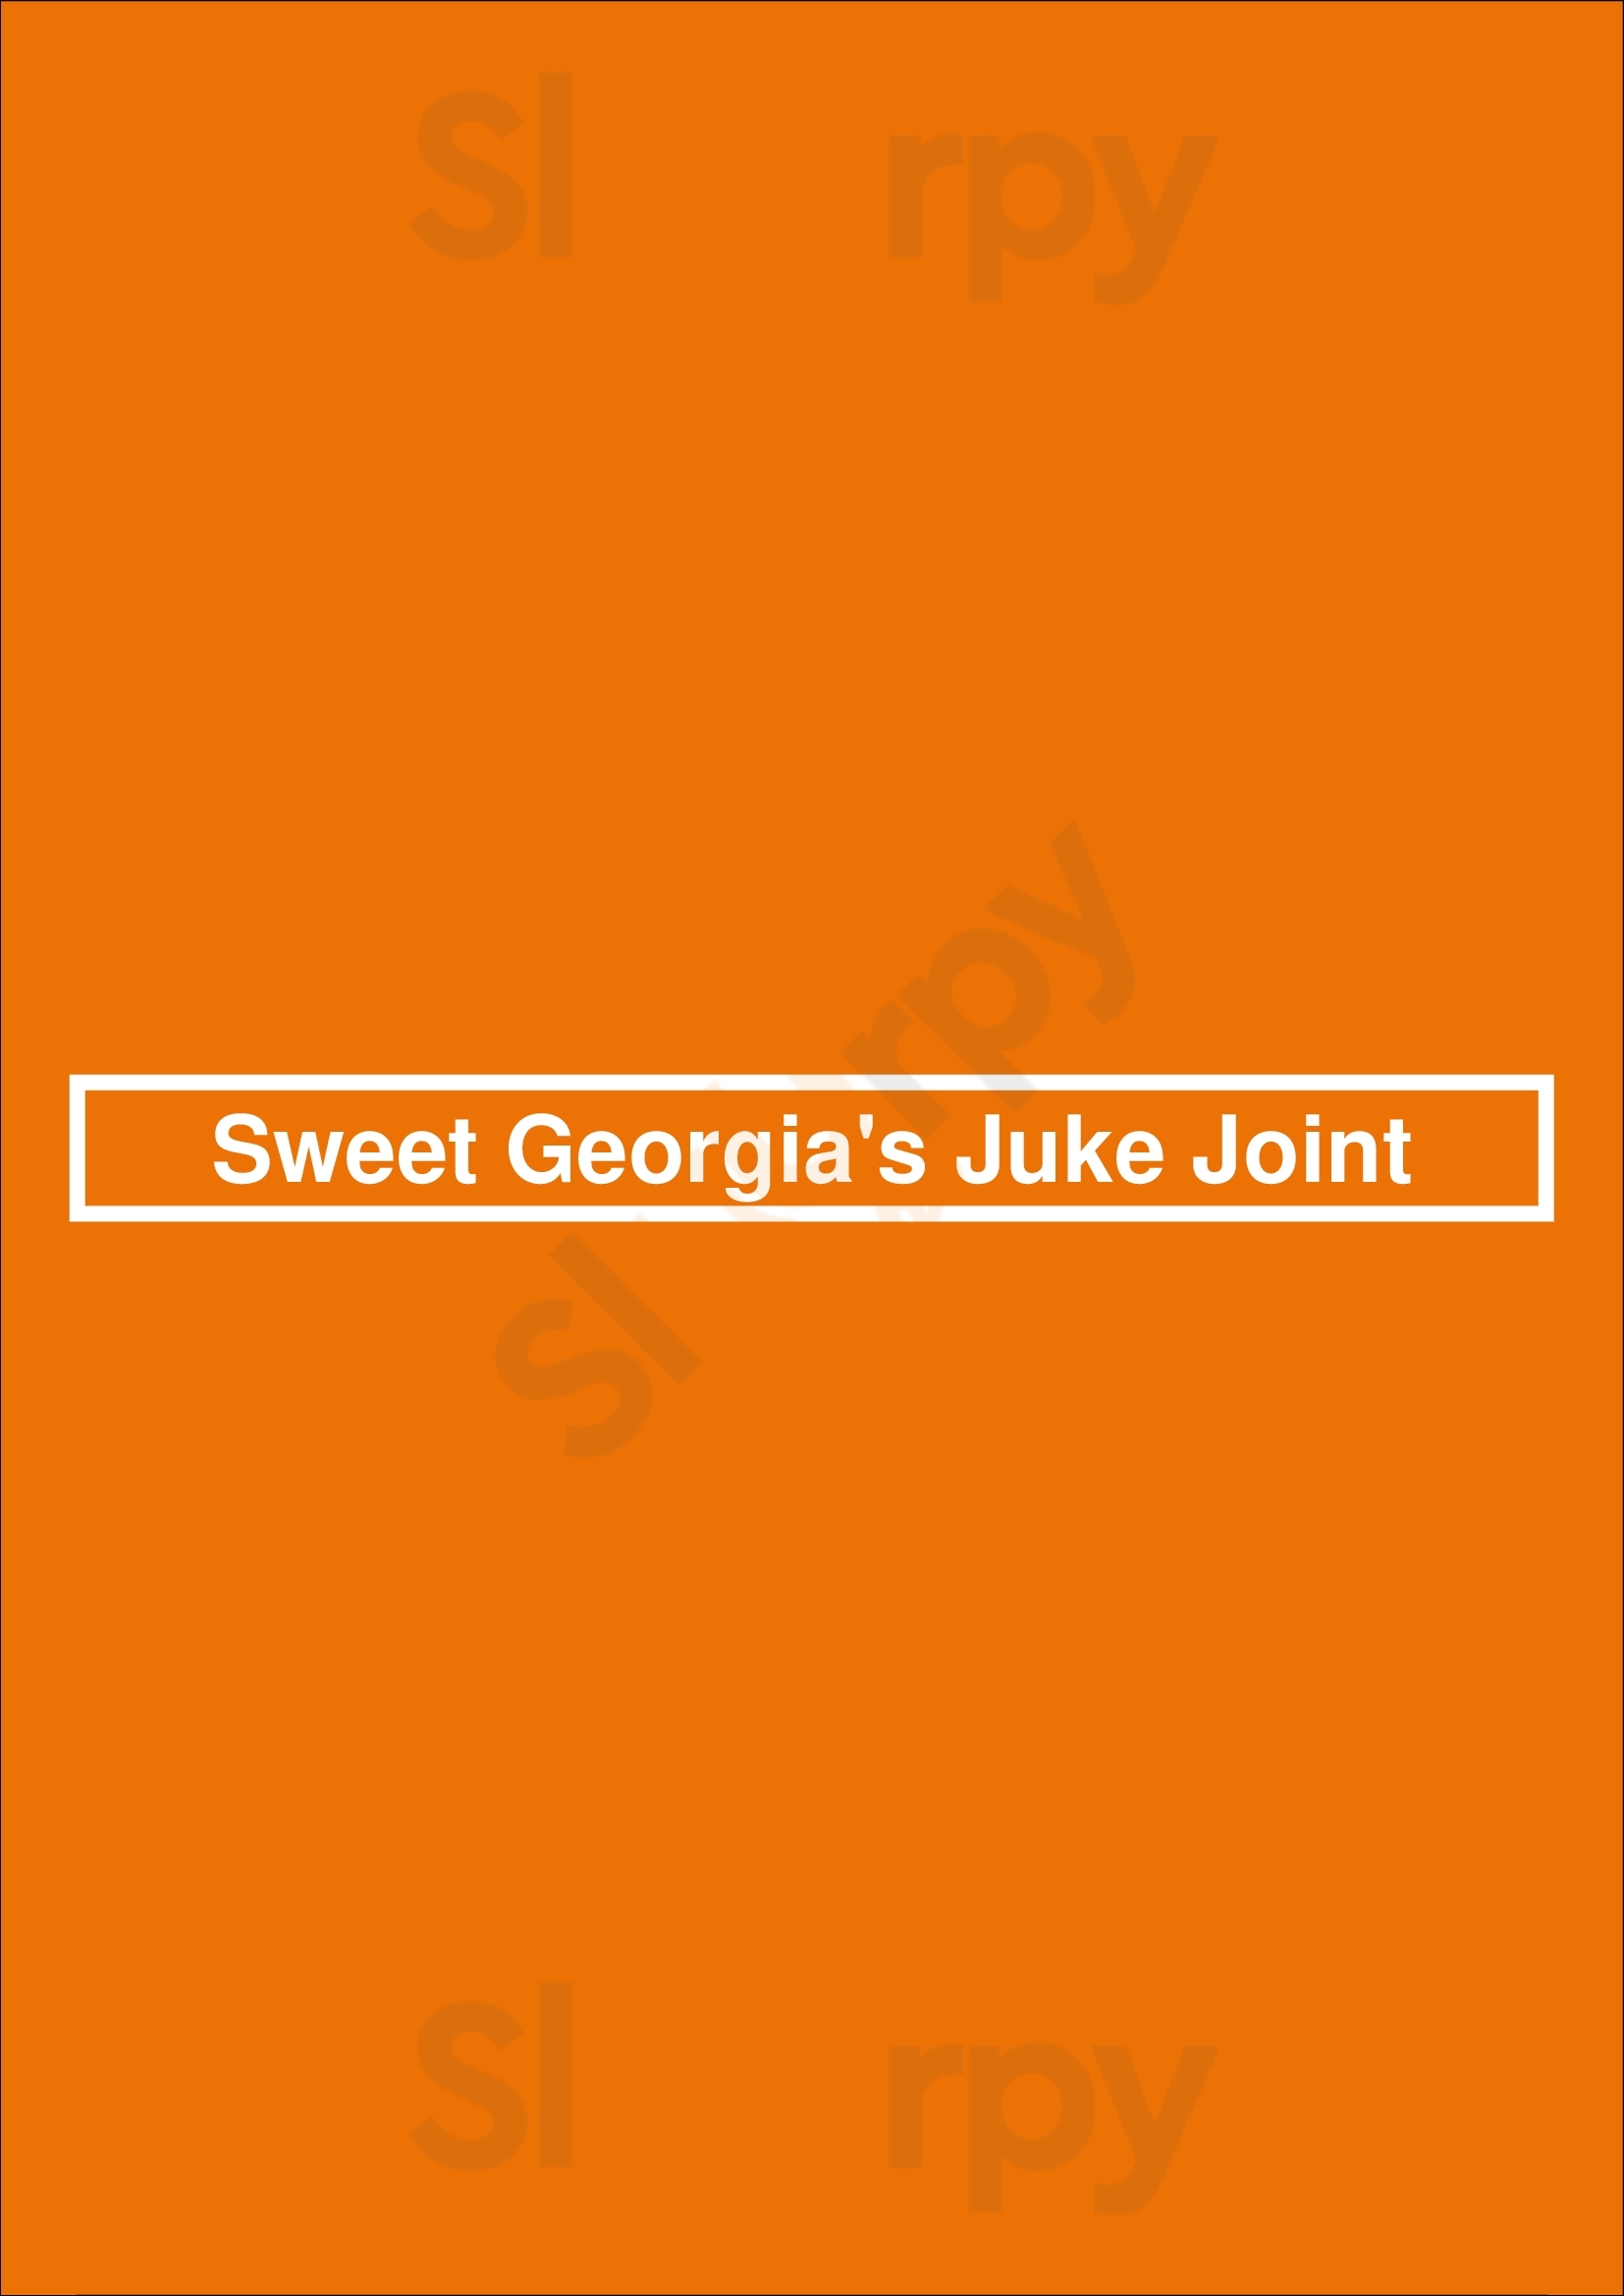 Sweet Georgia's Juke Joint Atlanta Menu - 1